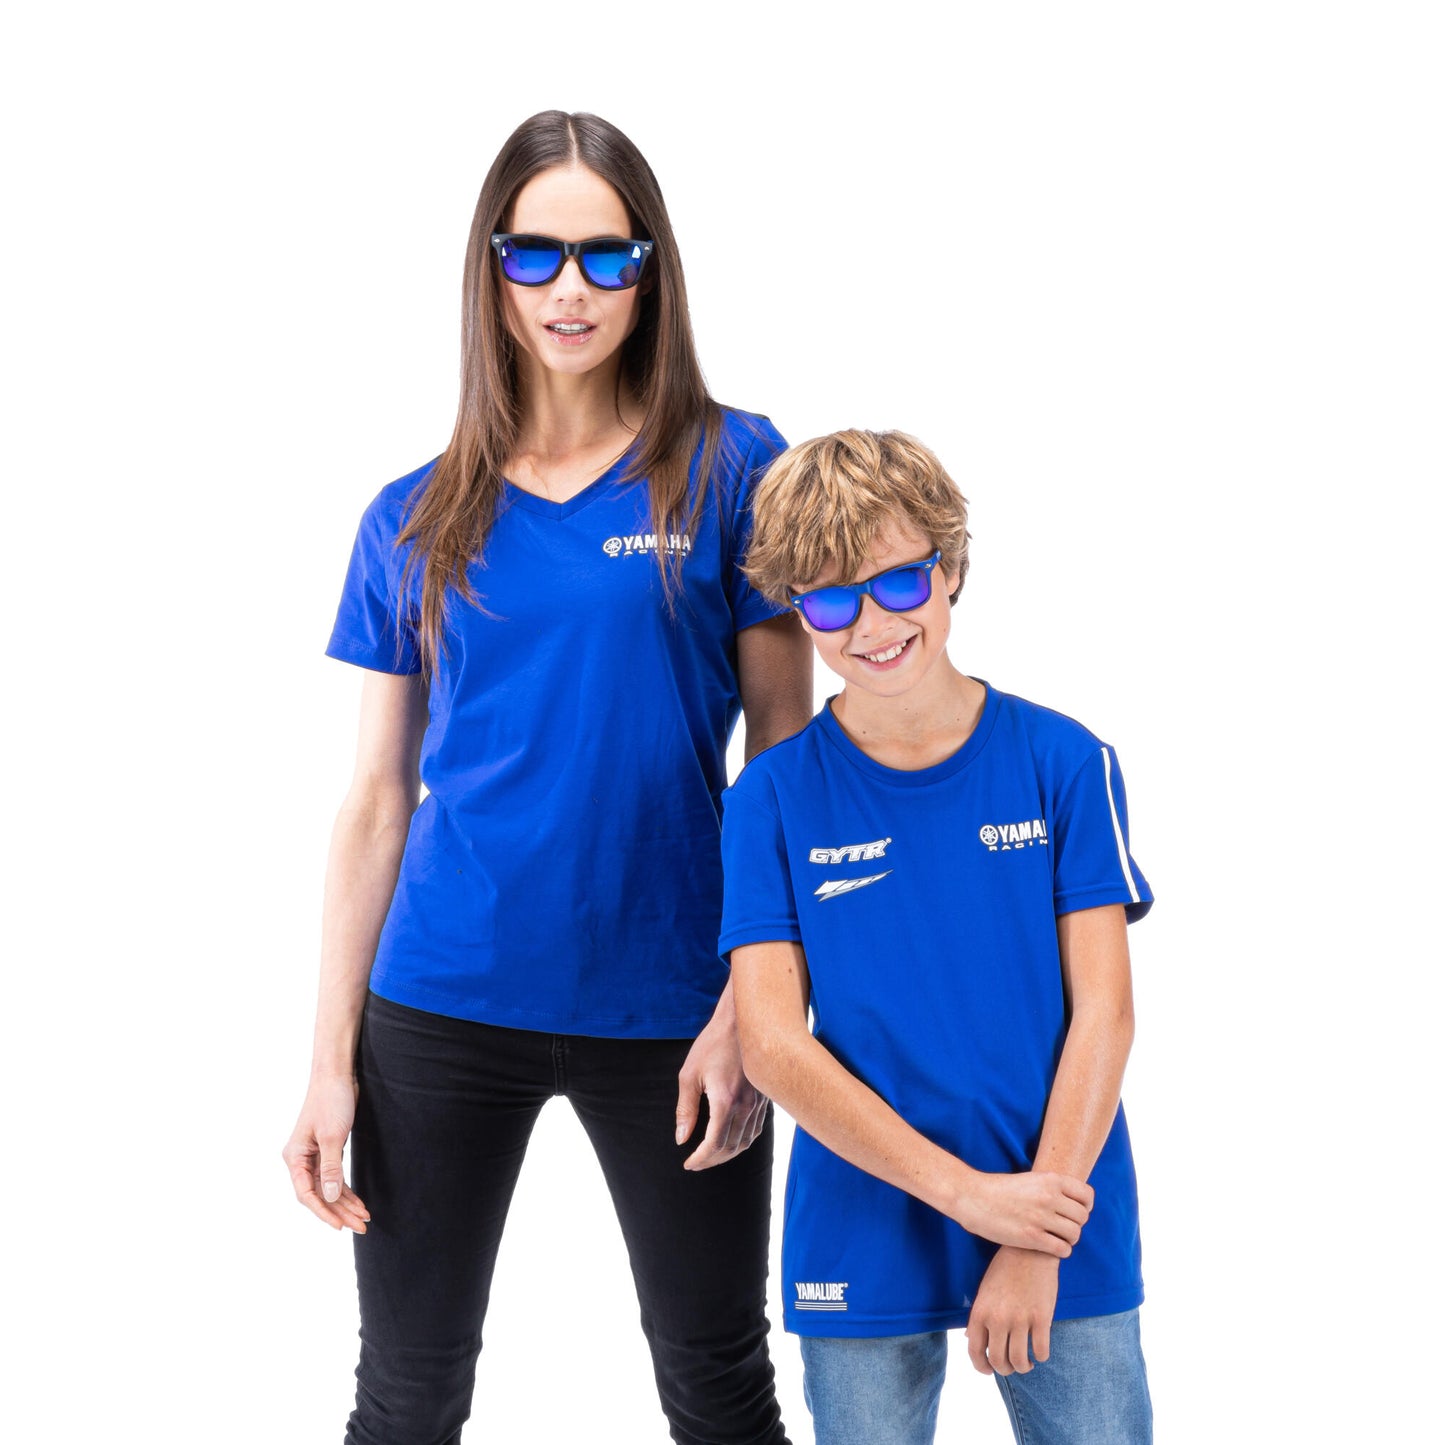 Paddock Blue Sunglasses Kids